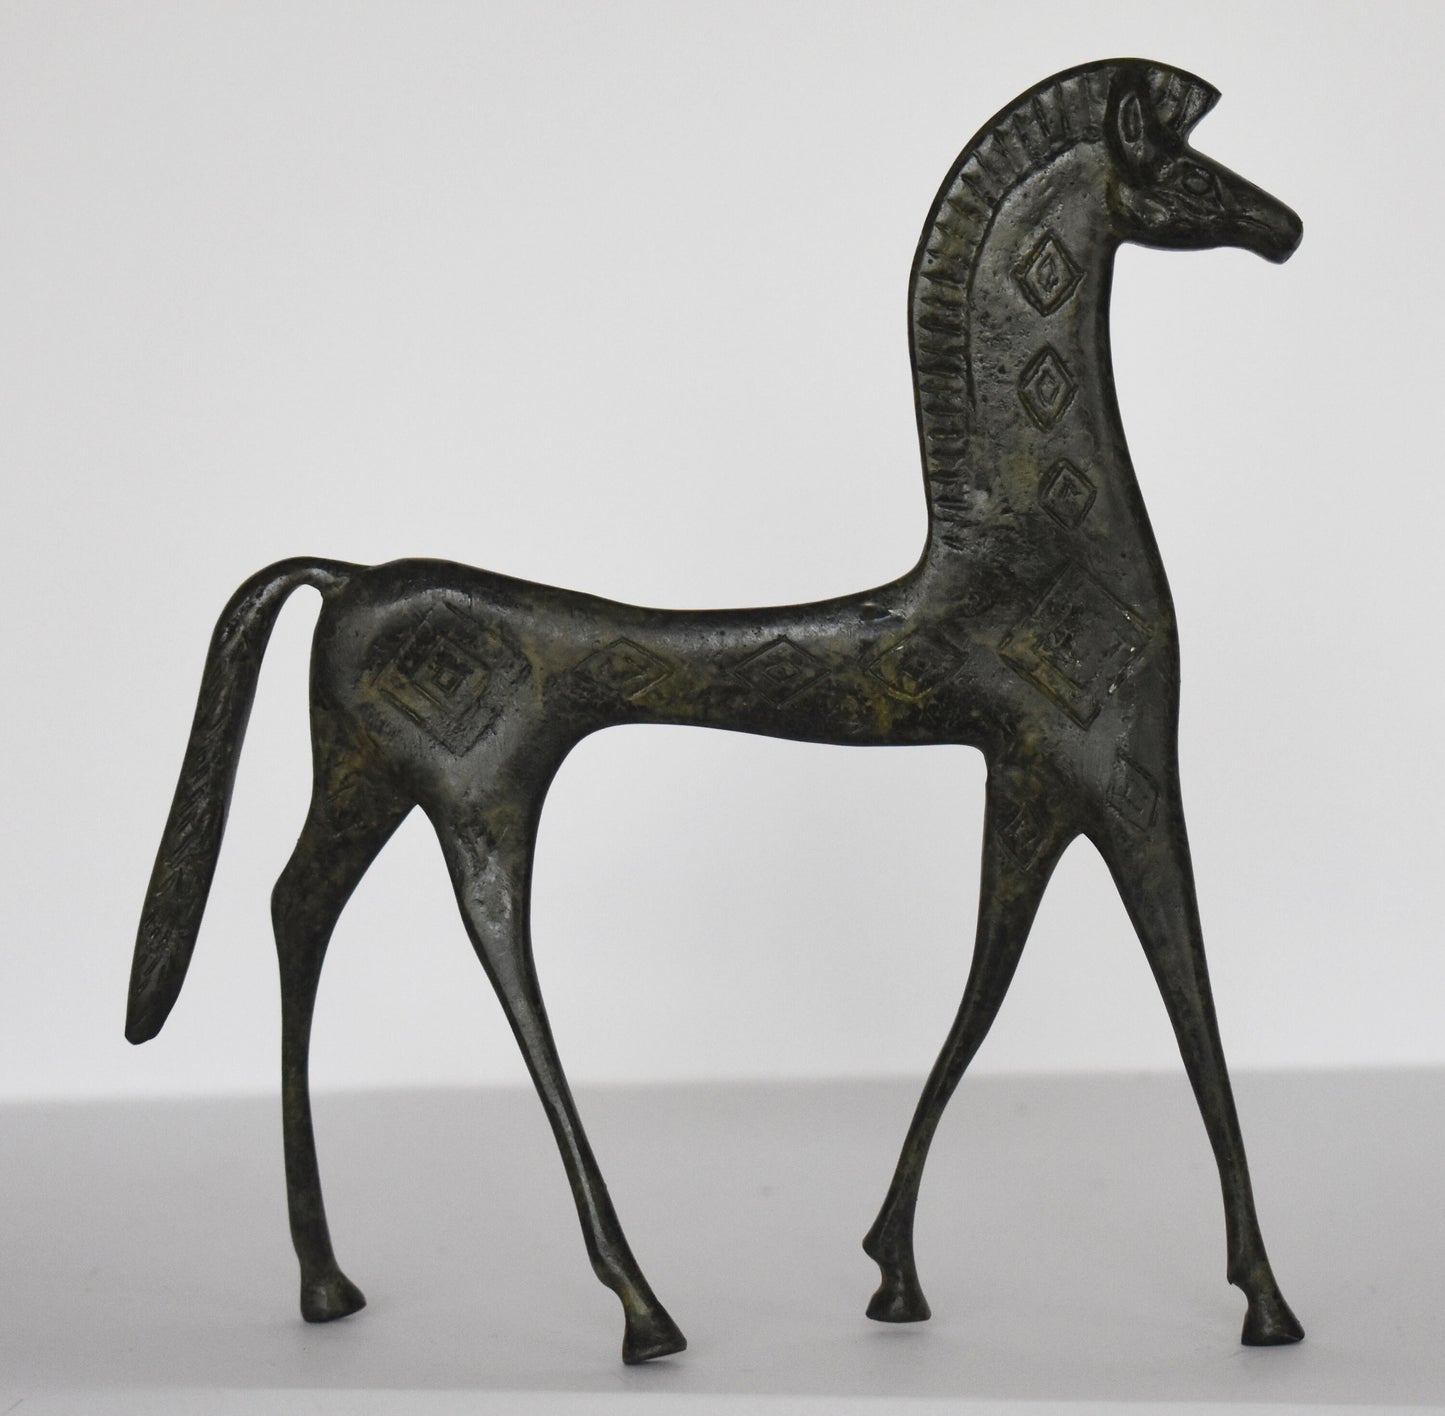 Ancient Greek Horse - pure Bronze Sculpture - Meander Design - Symbol of Wealth and Prosperity